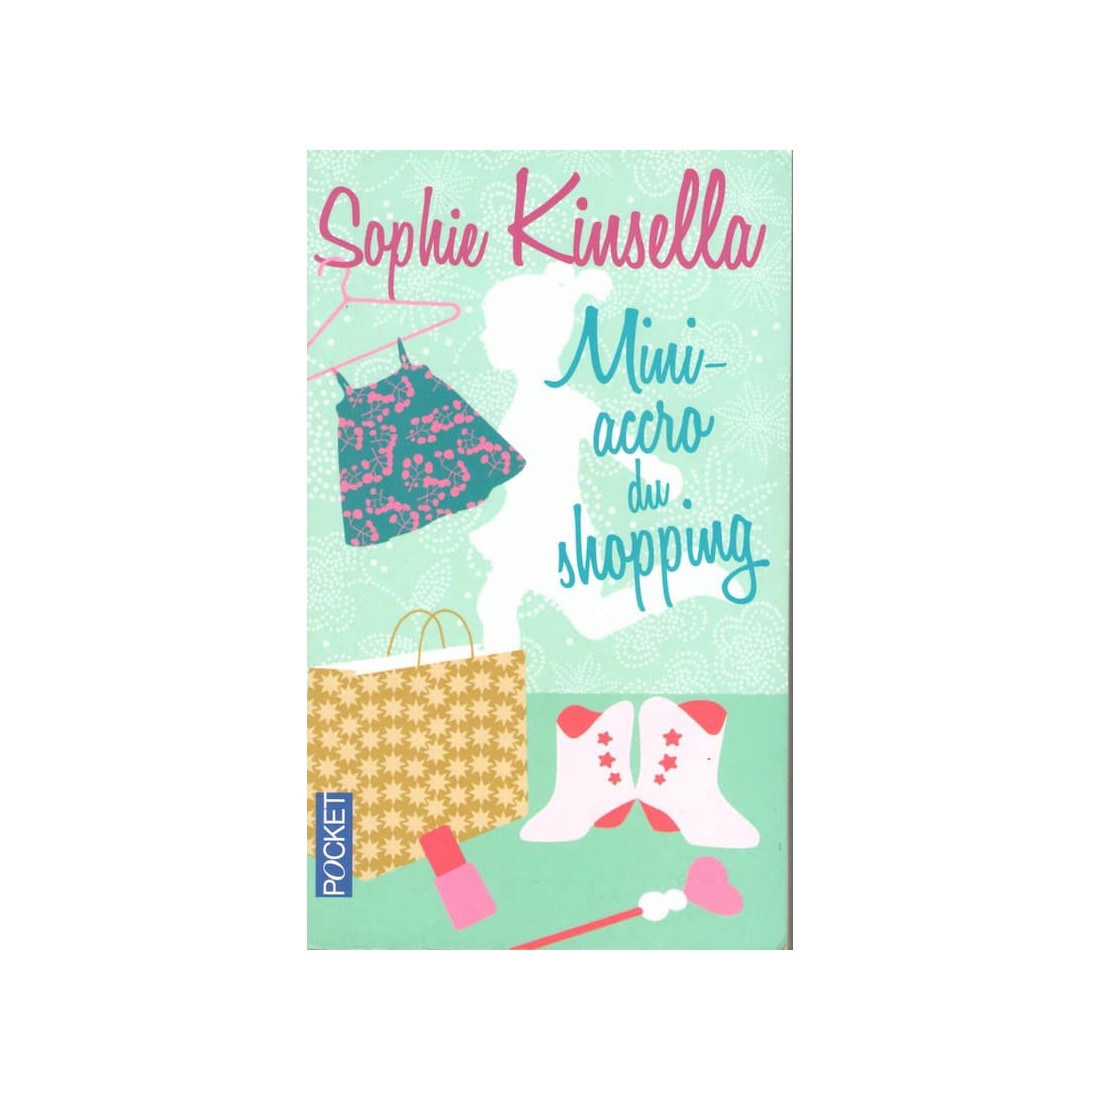 Mini accro du shopping - Roman de Sophie Kinsella - Ocazlivres.com